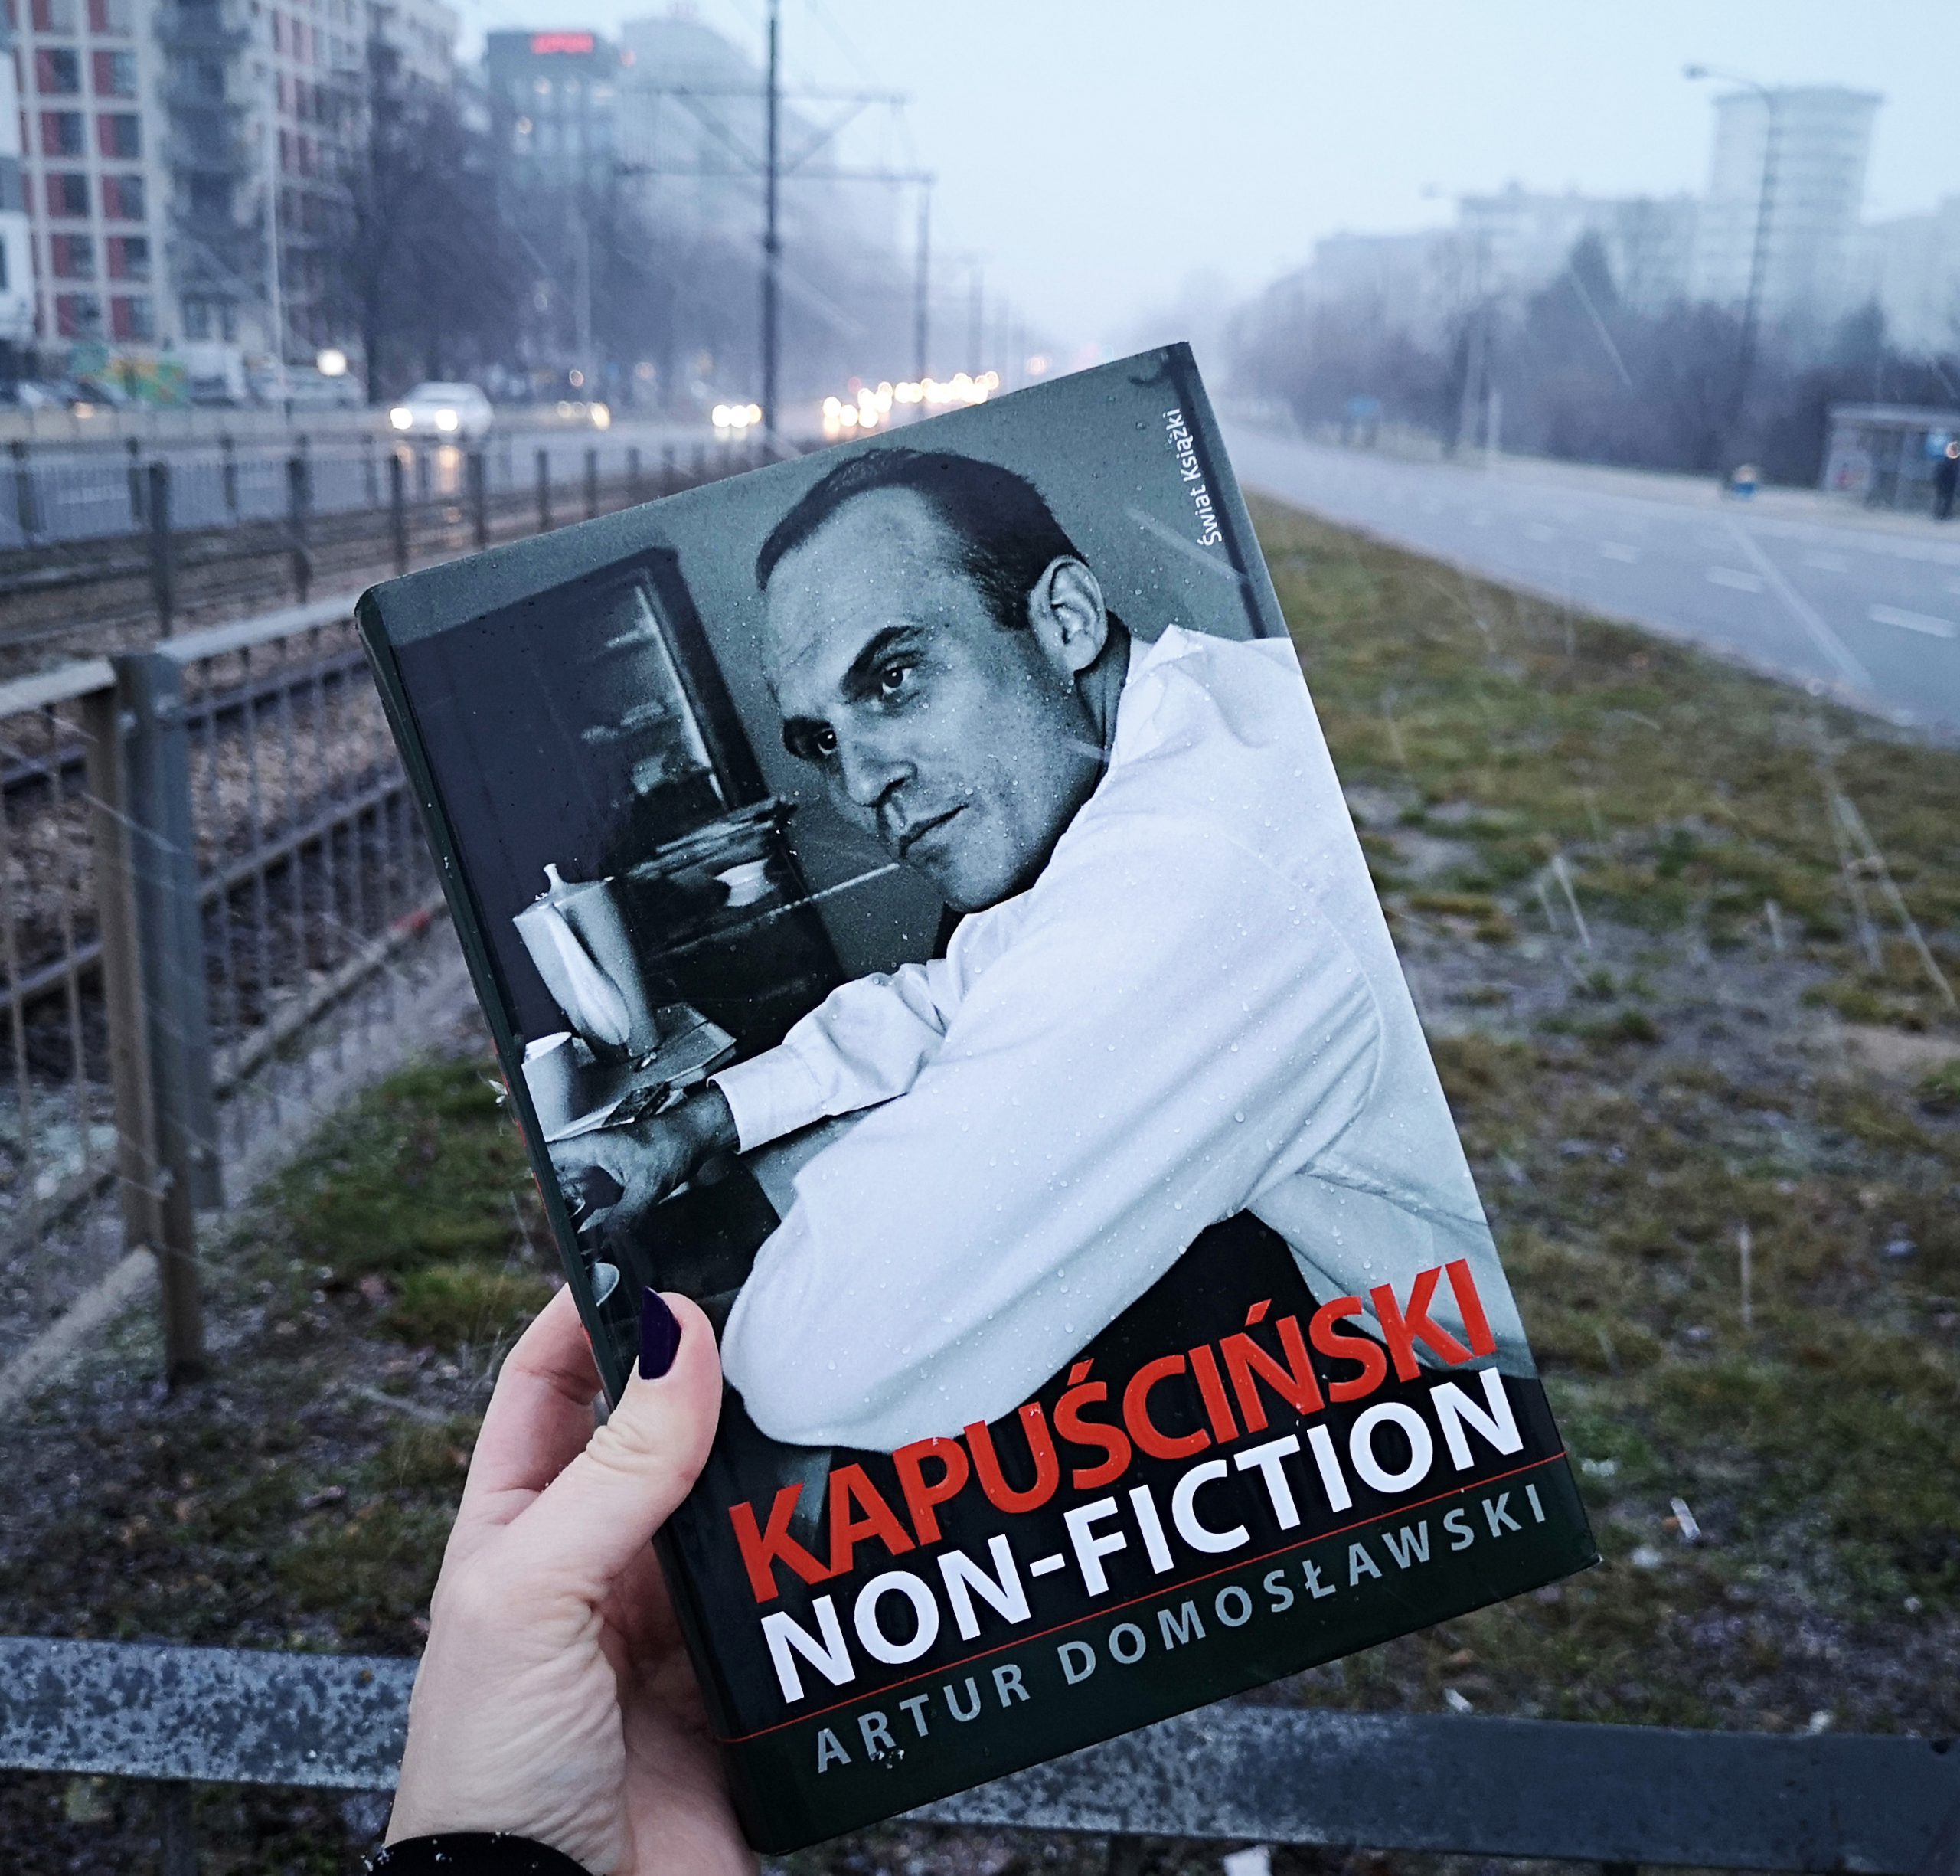 Kapuściński Non-Fiction